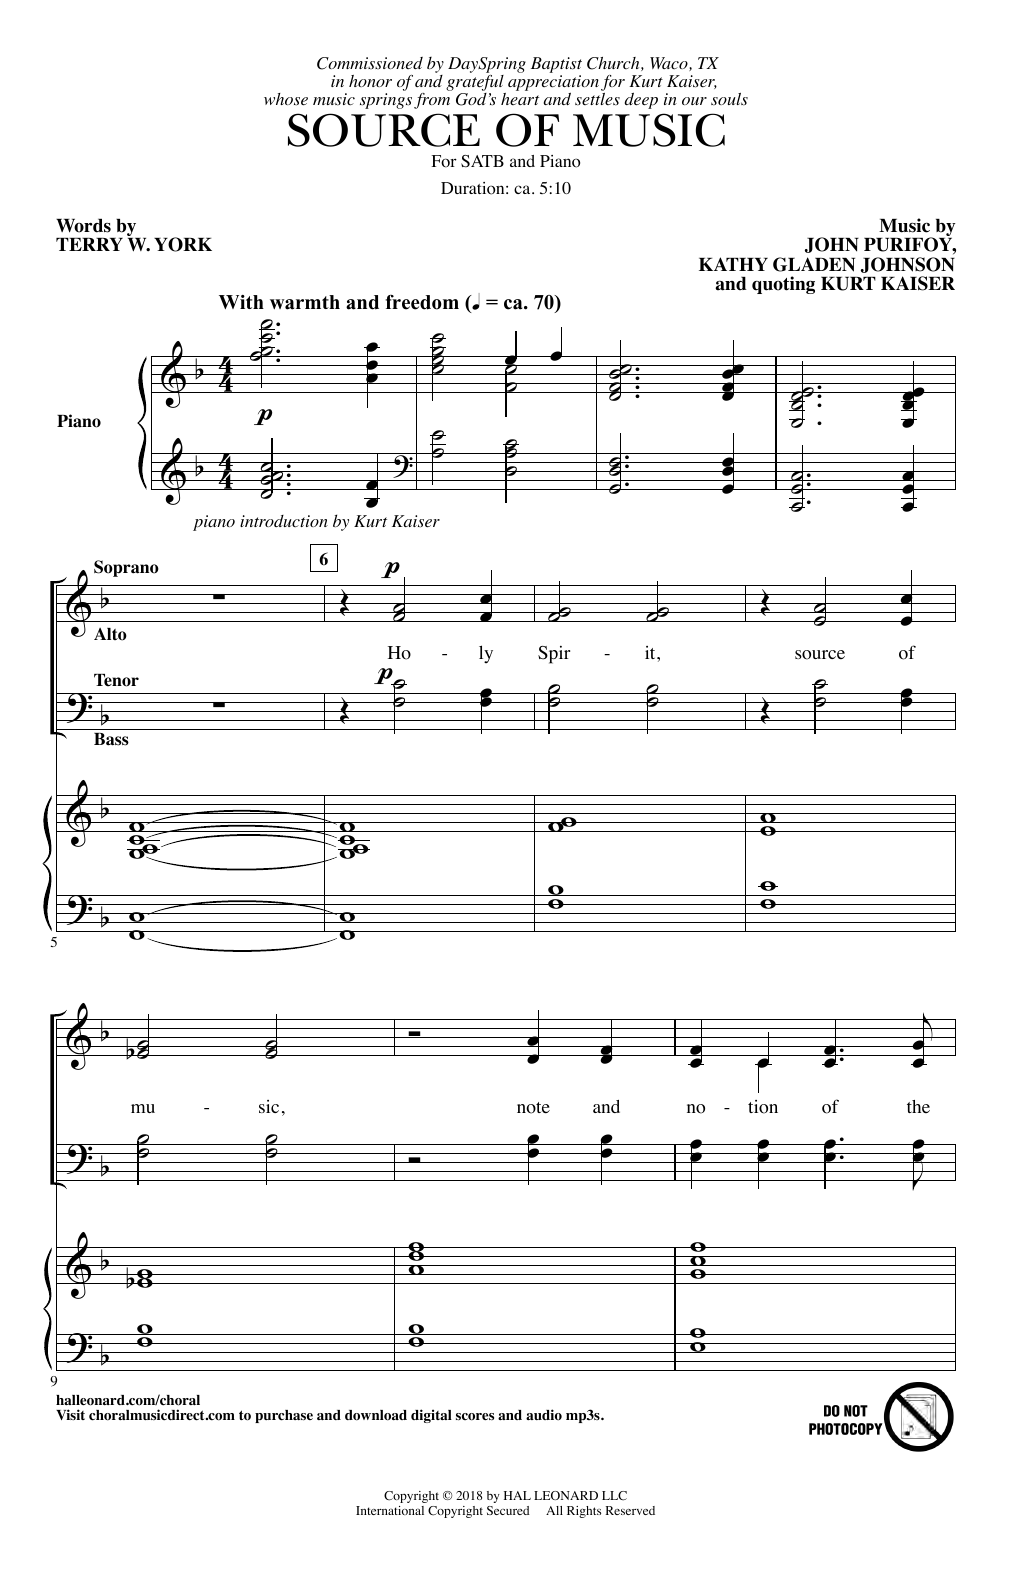 Kurt Kaiser Source Of Music Sheet Music Notes & Chords for SATB Choir - Download or Print PDF